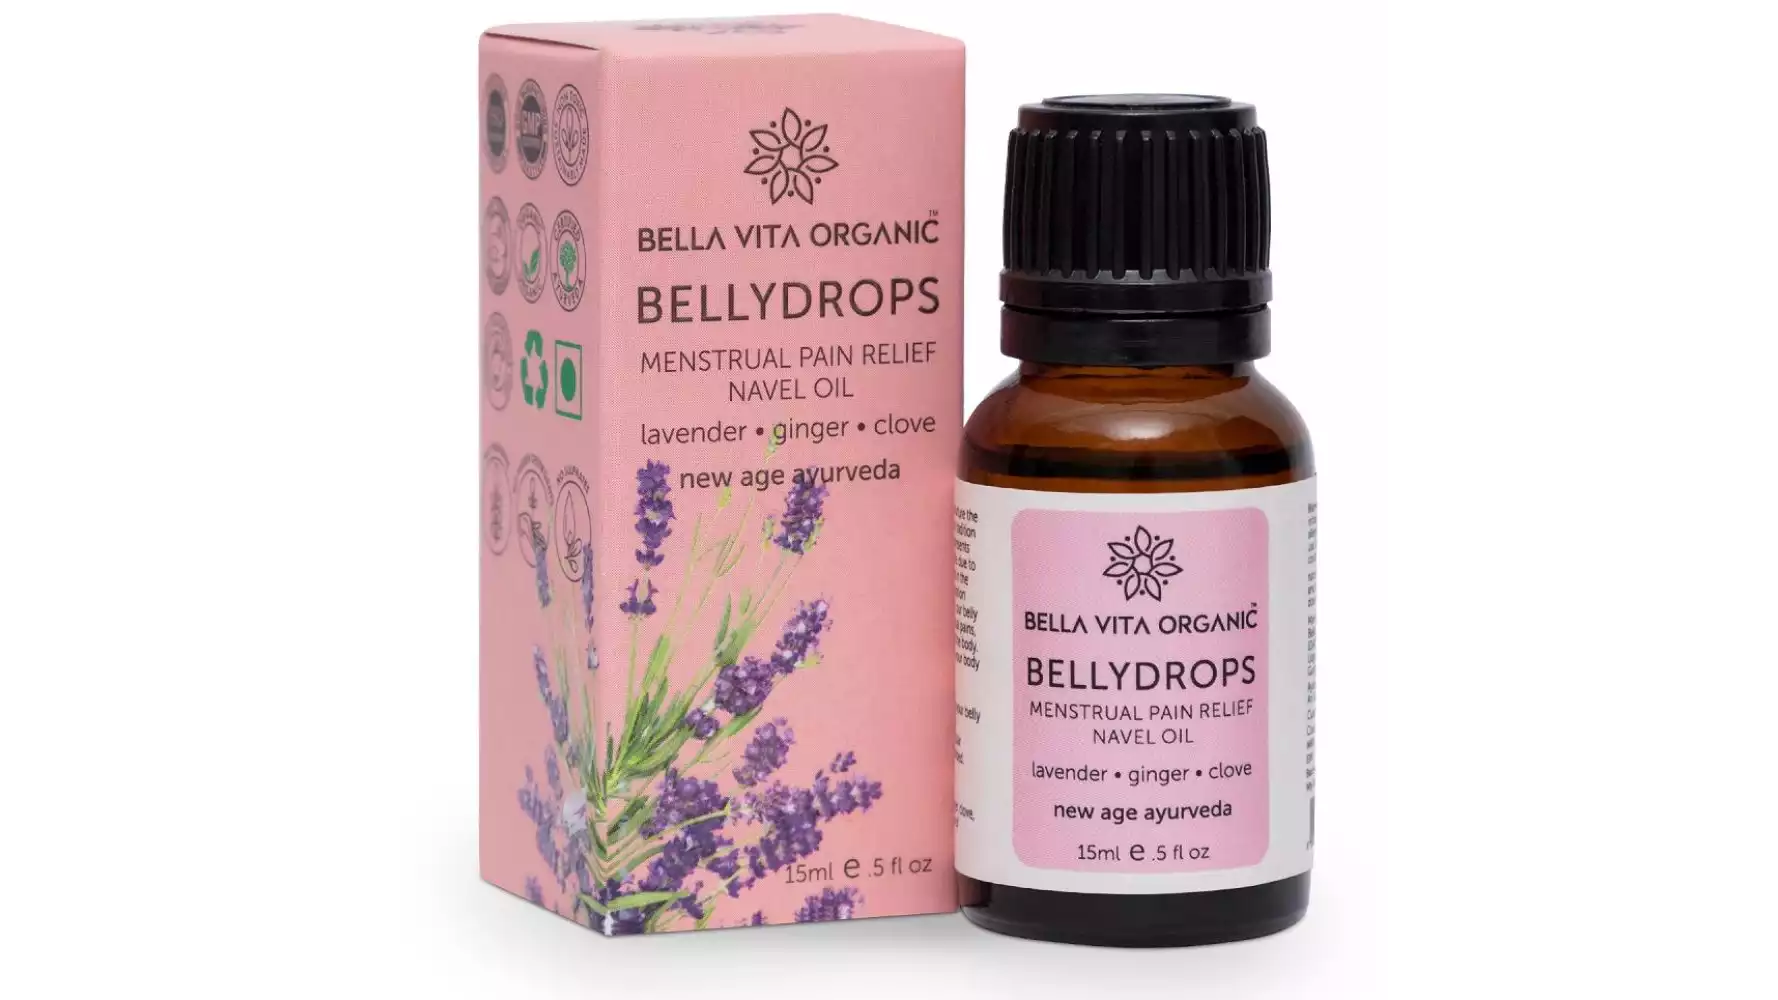 Bella Vita Organic Belly Drops Menstrual Pain Relief Navel Oil (15ml)